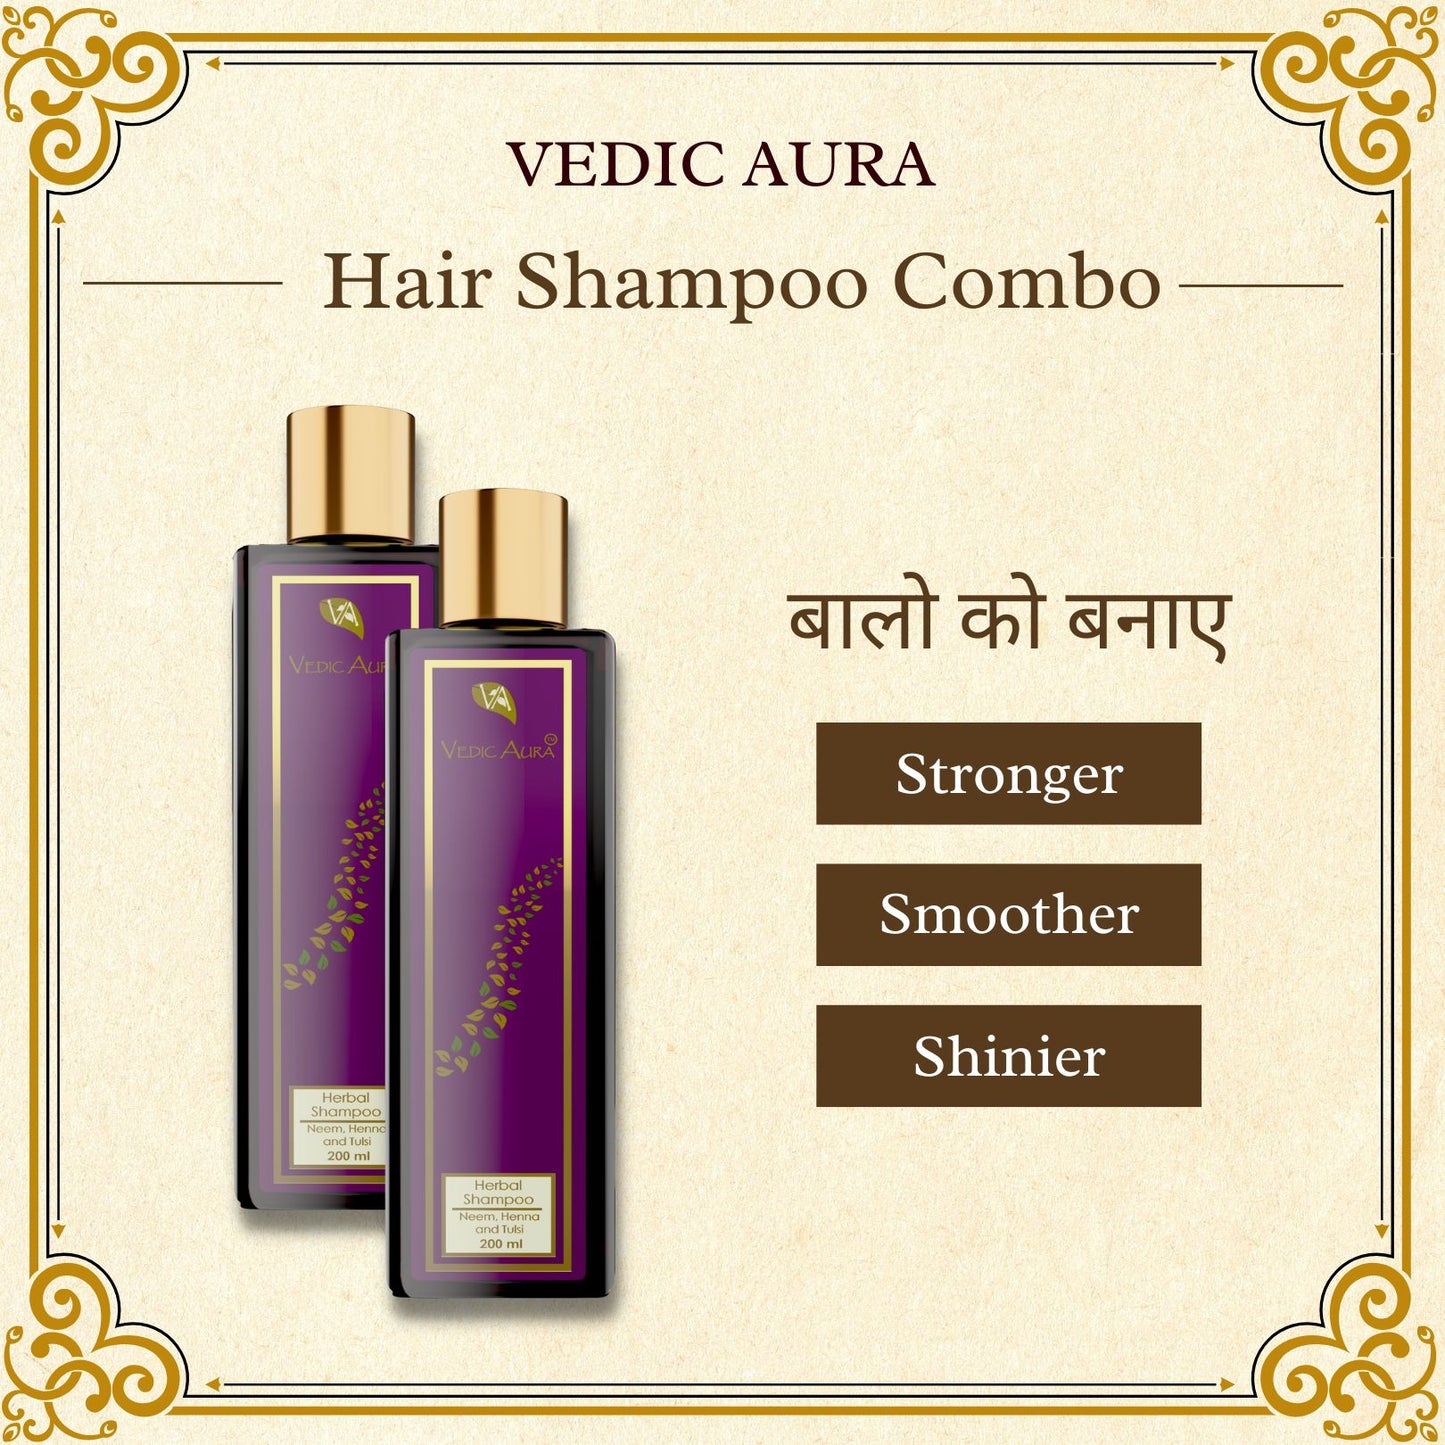 Vedic Aura Hair Shampoo Combo